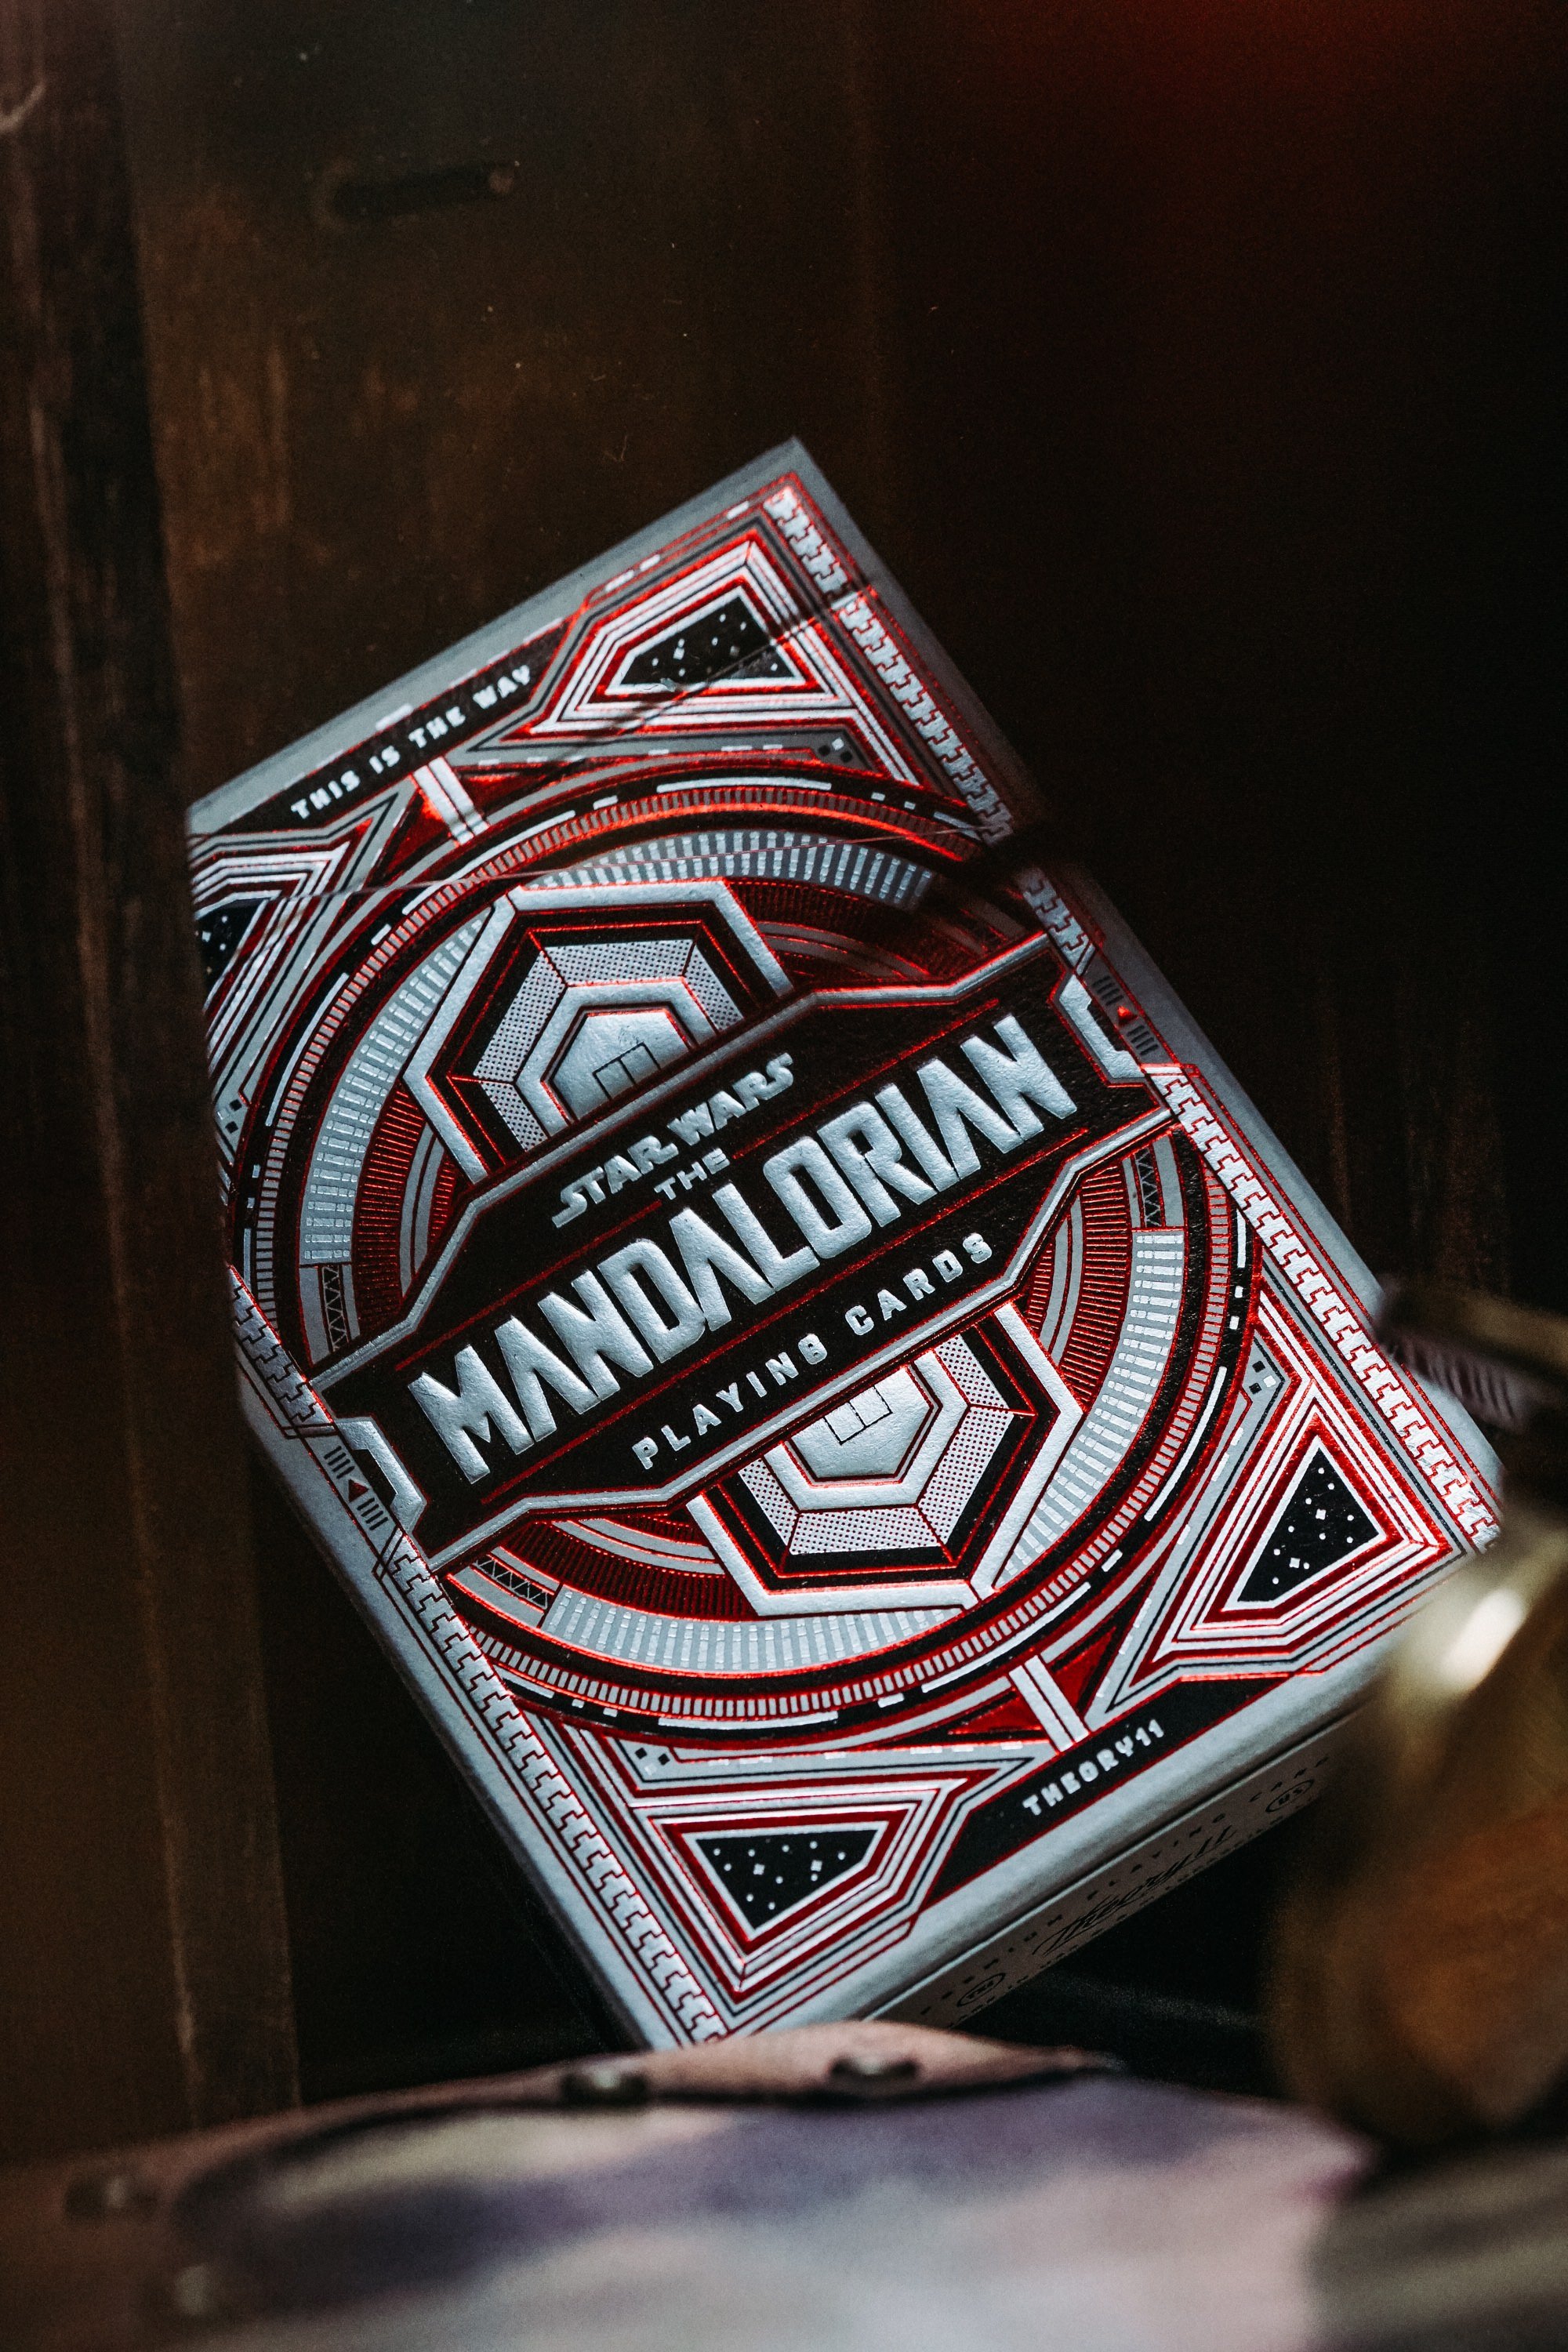 theory11 Mandalorian Playing Cards 